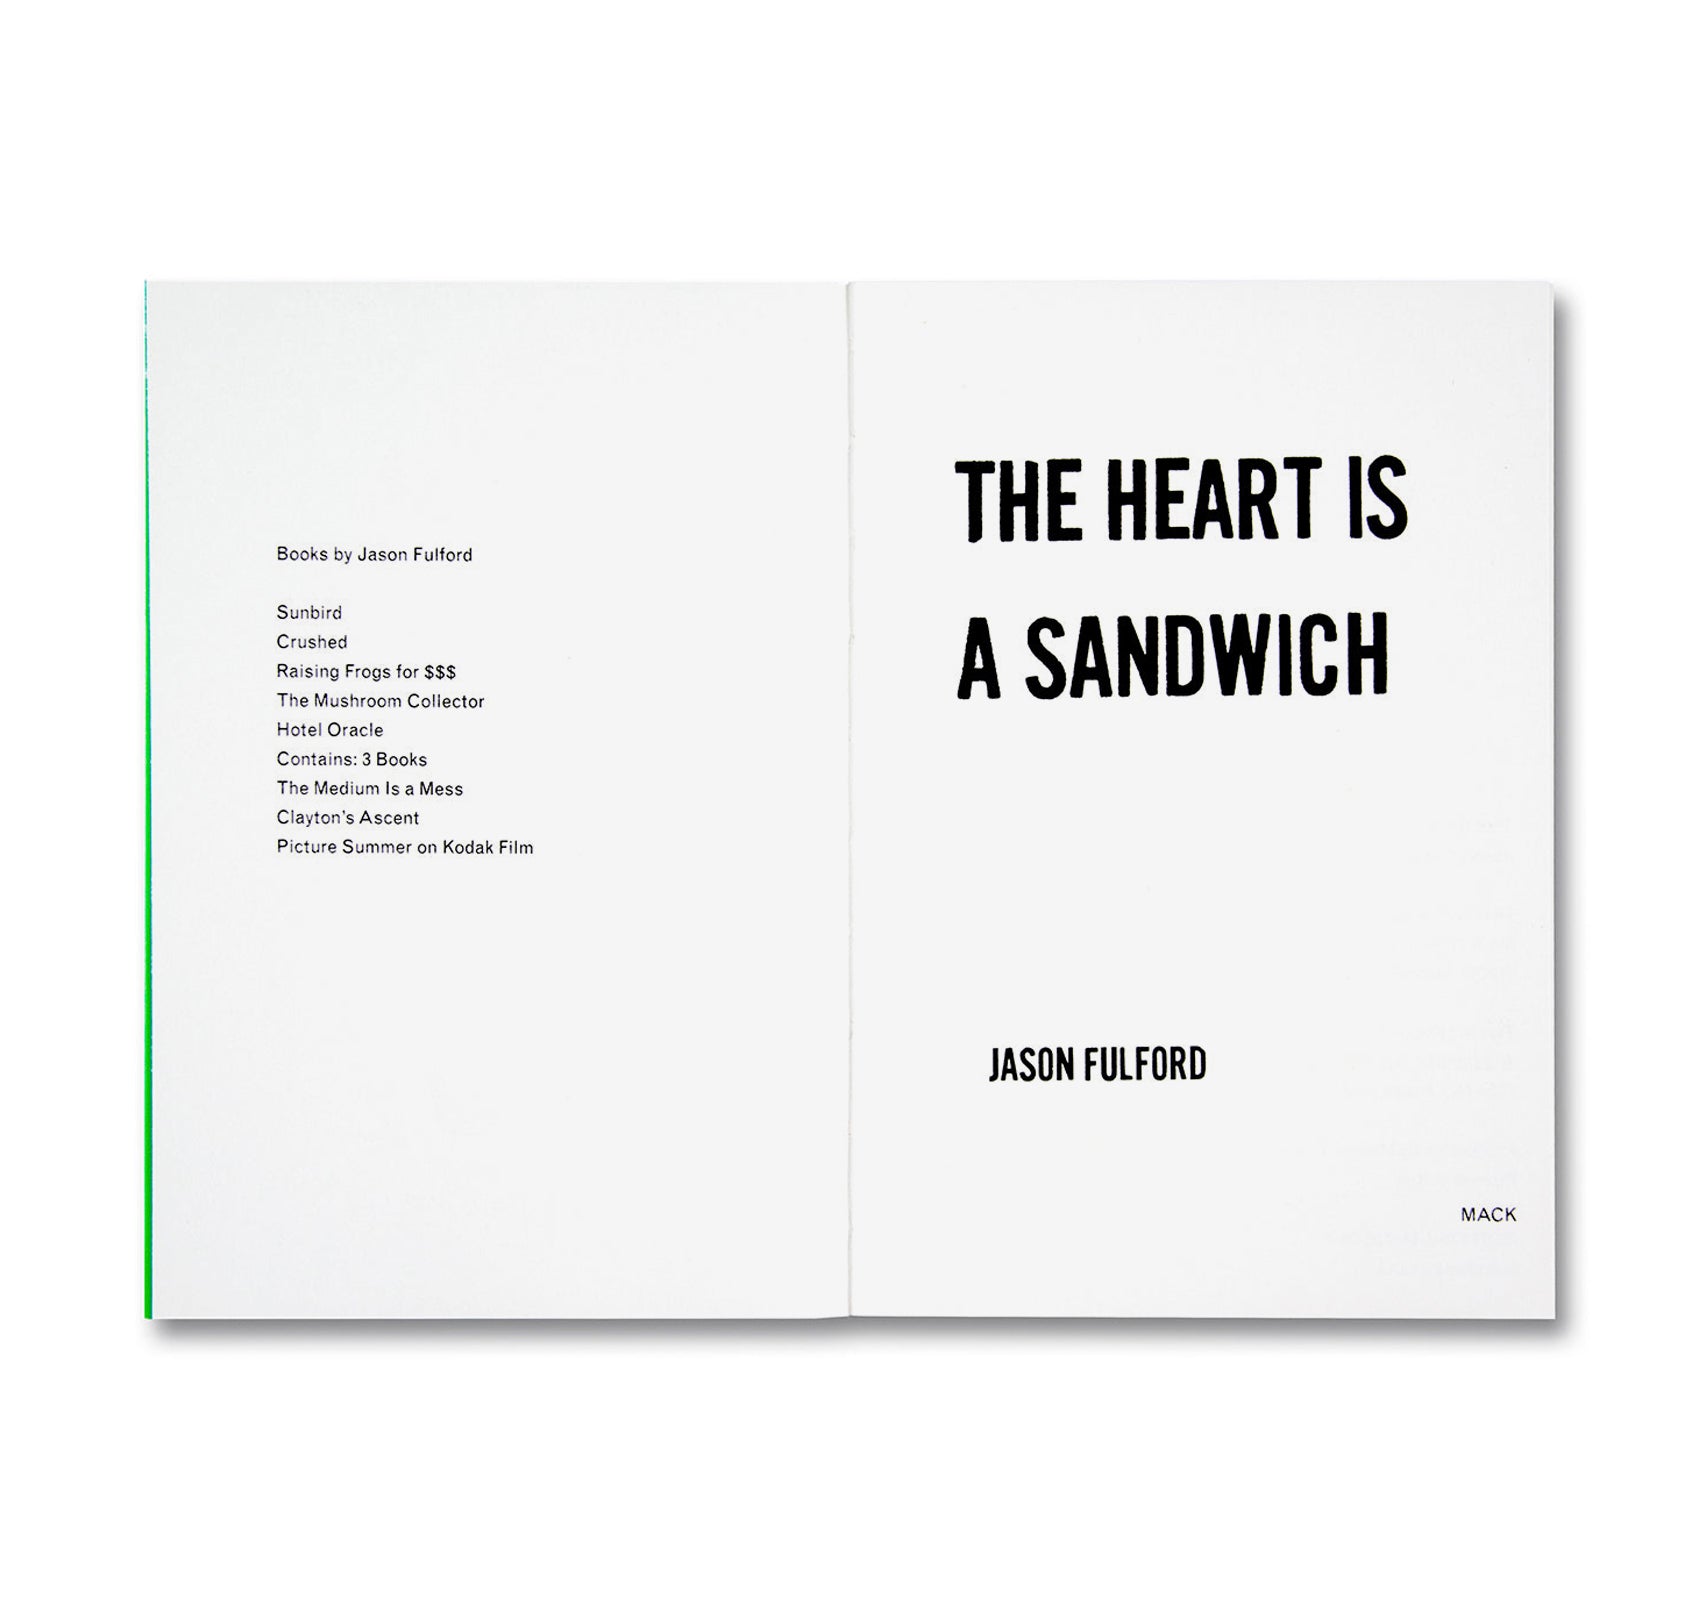 THE HEART IS A SANDWICH by Jason Fulford